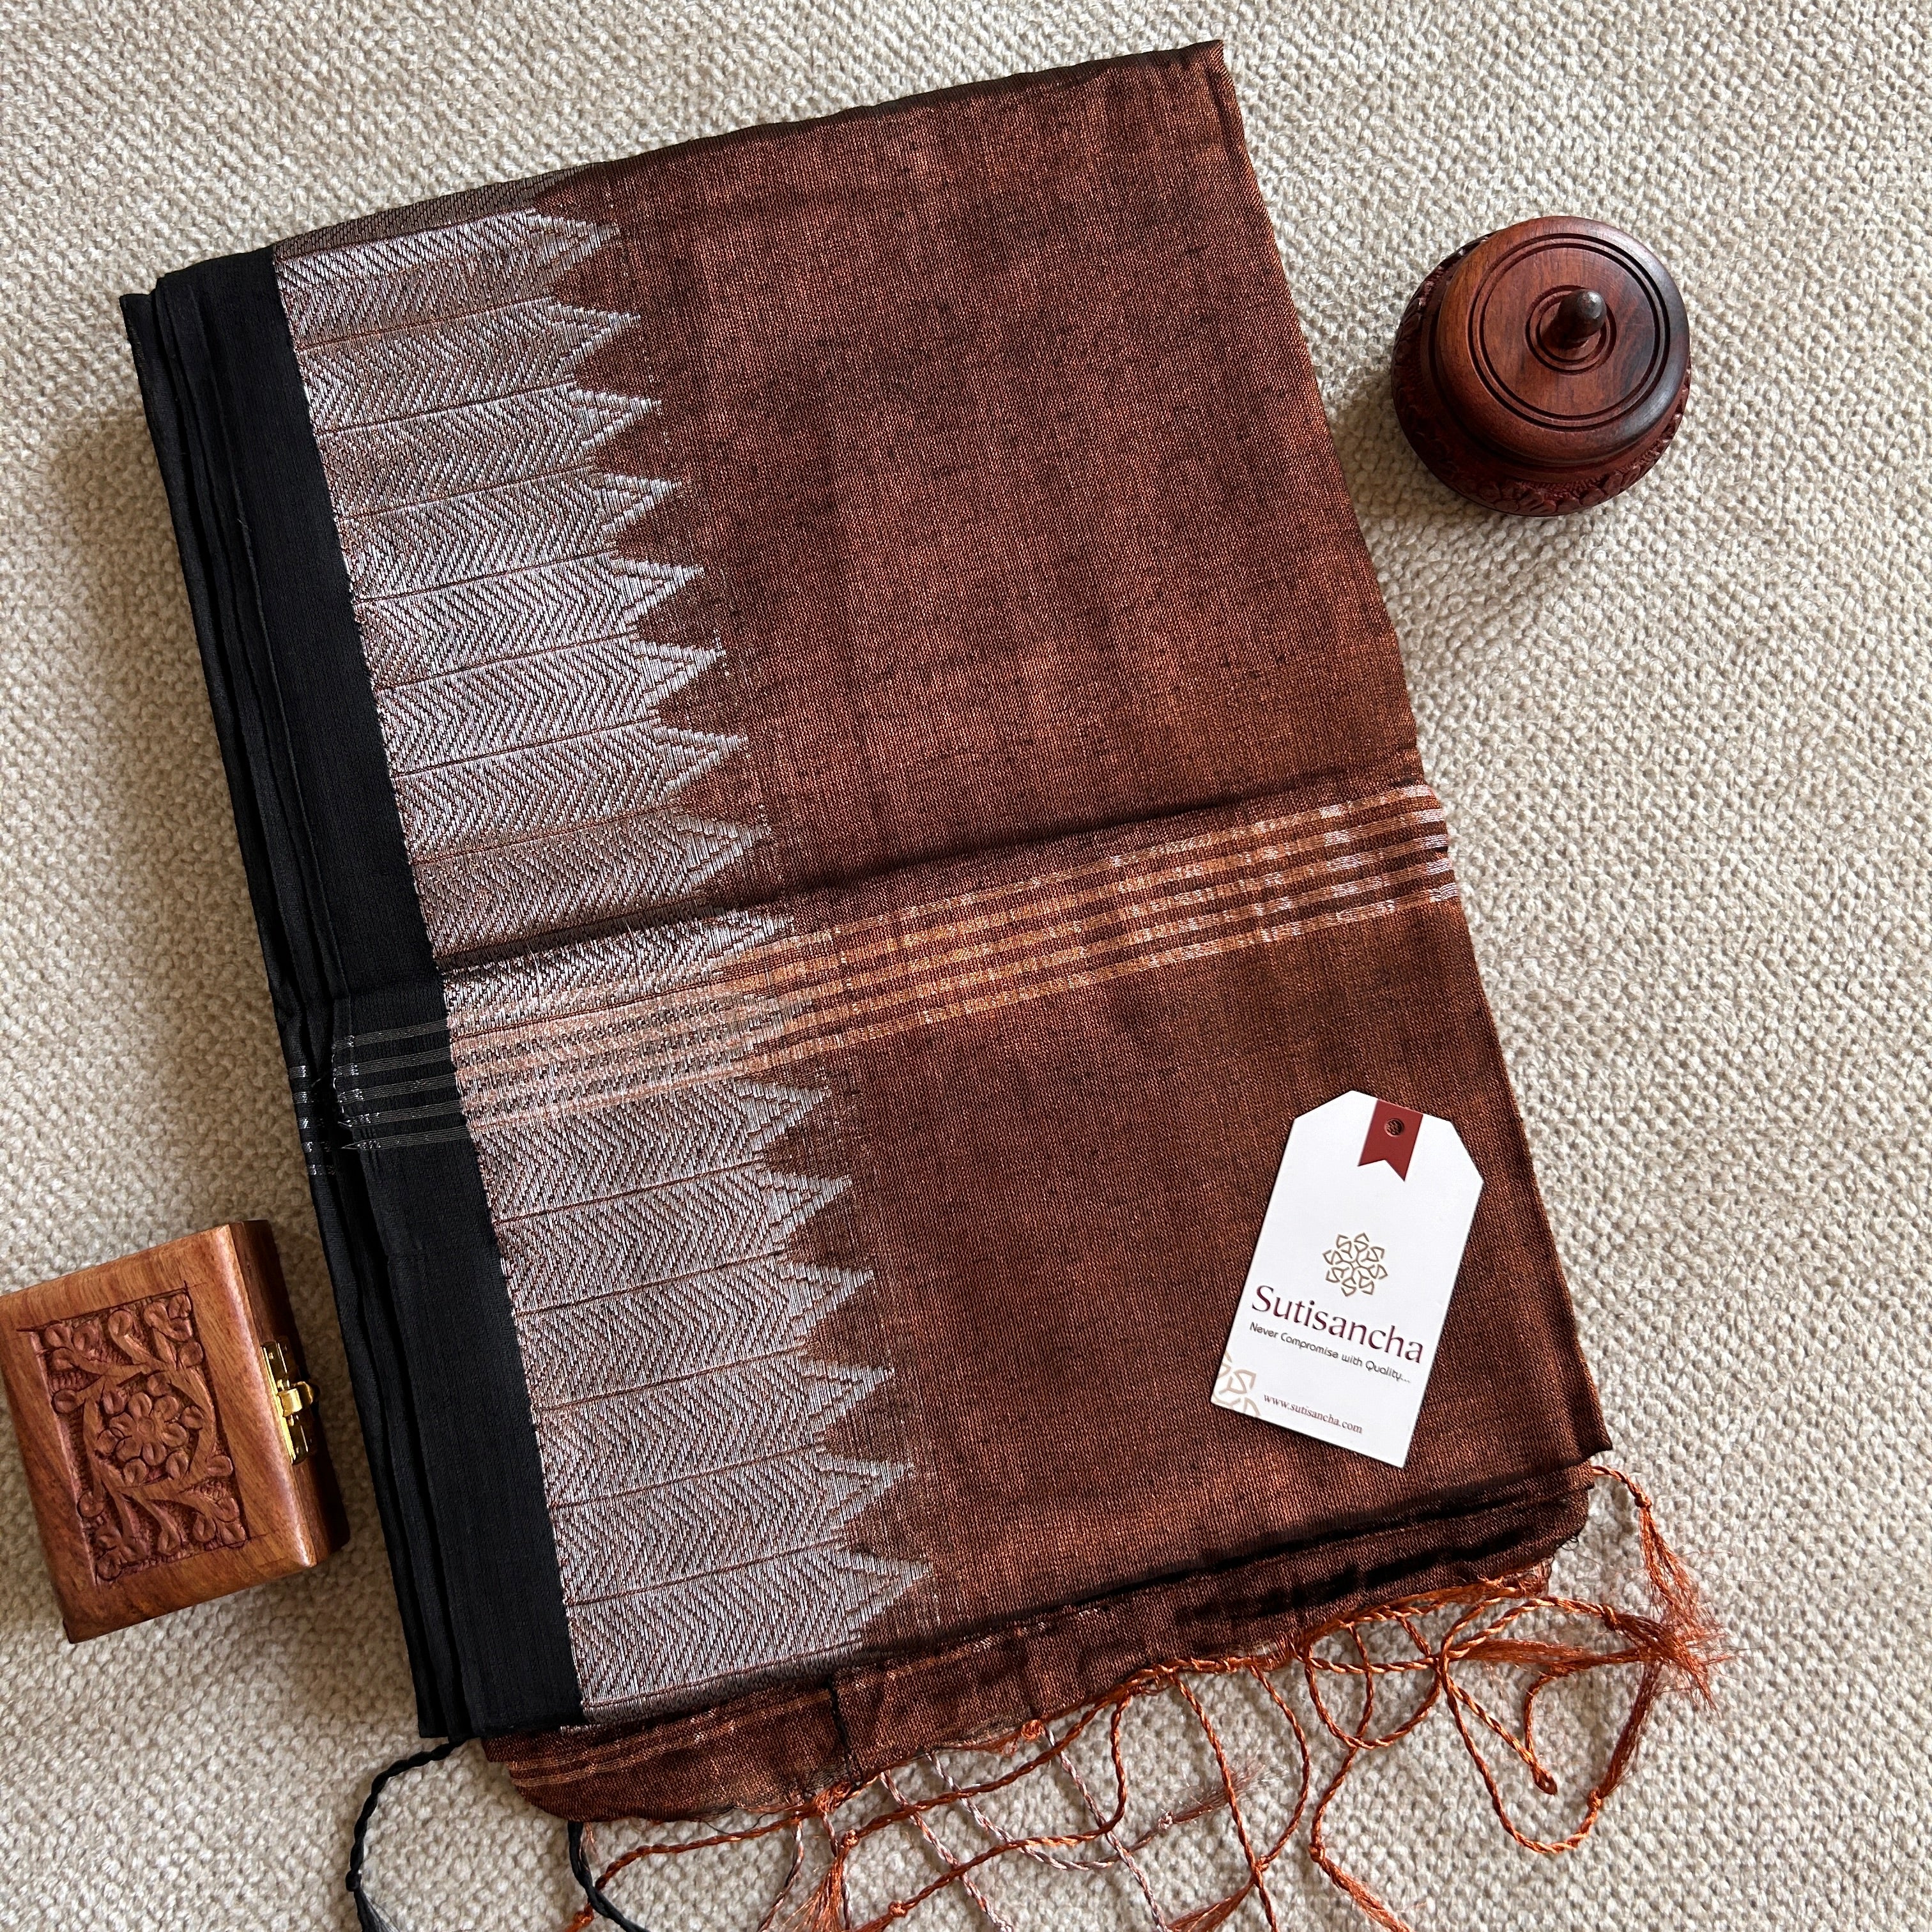 Sutisancha Copper Handloom Designer Tissue Saree